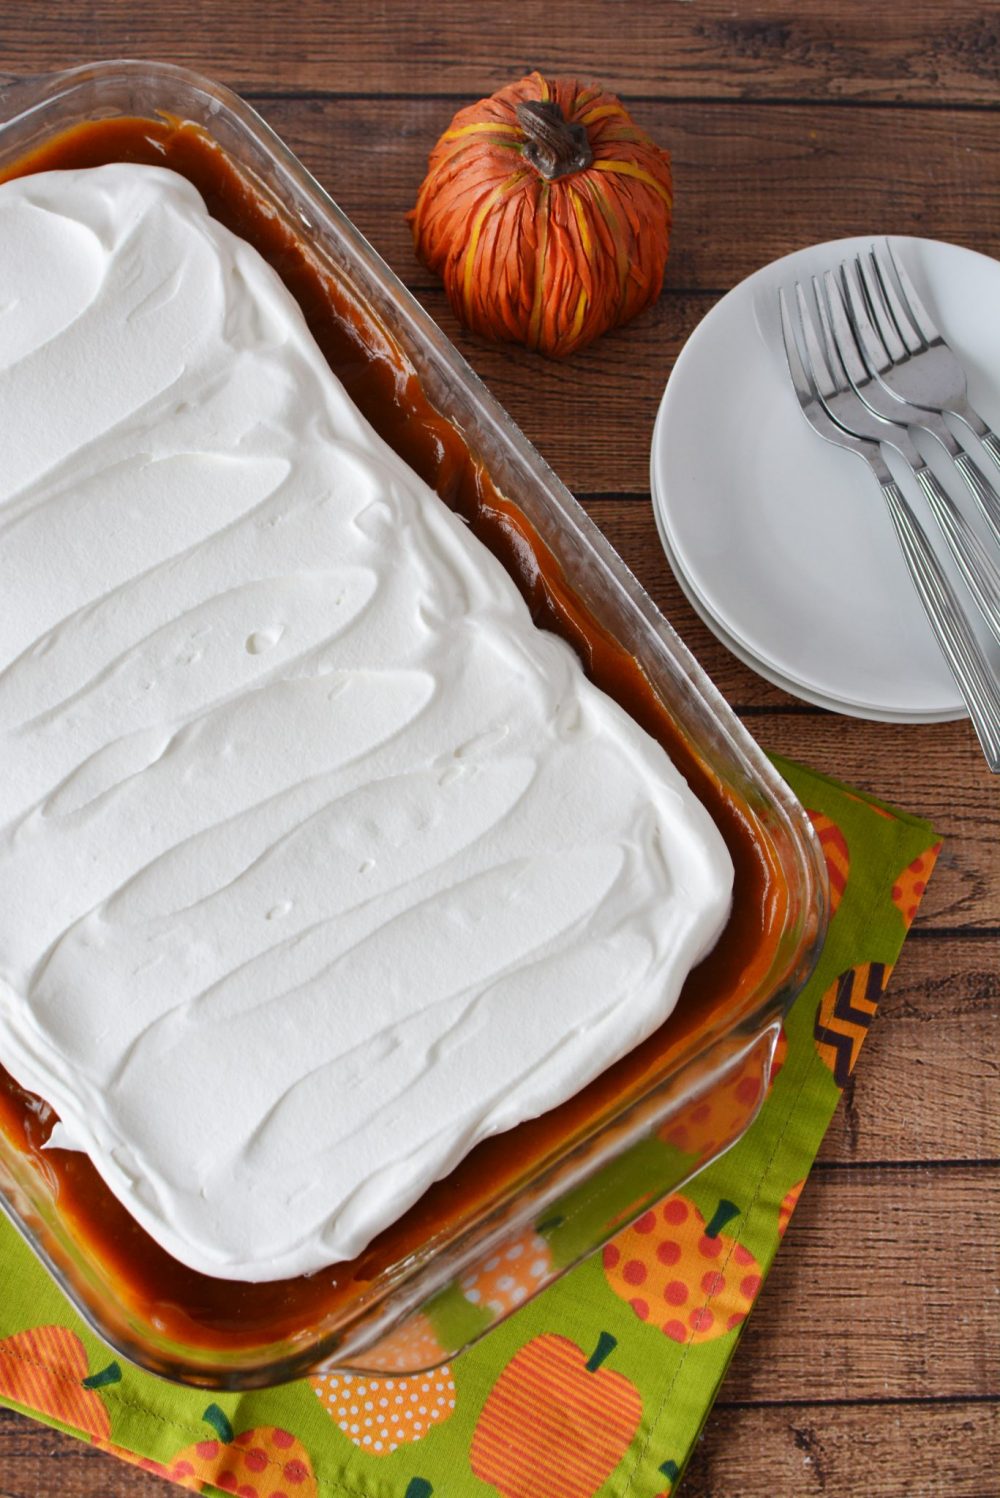 Creamy Pumpkin Cake Recipe for Thanksgiving